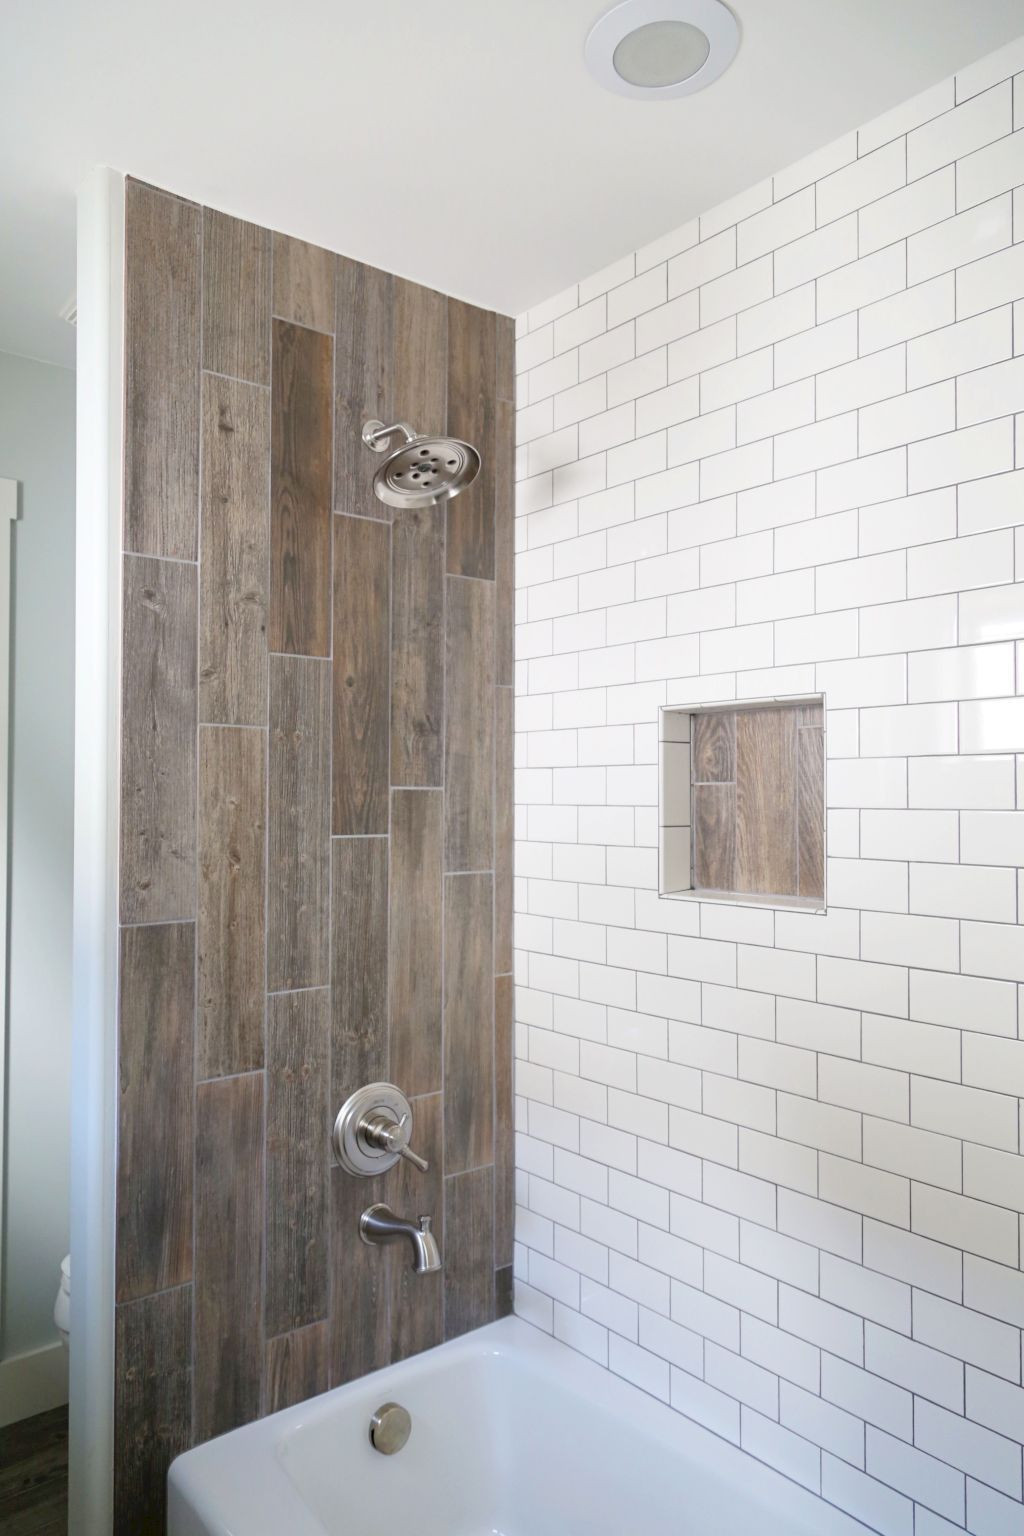 Wood Grain Tile Bathroom
 15 Wood Tile Showers For Your Bathroom